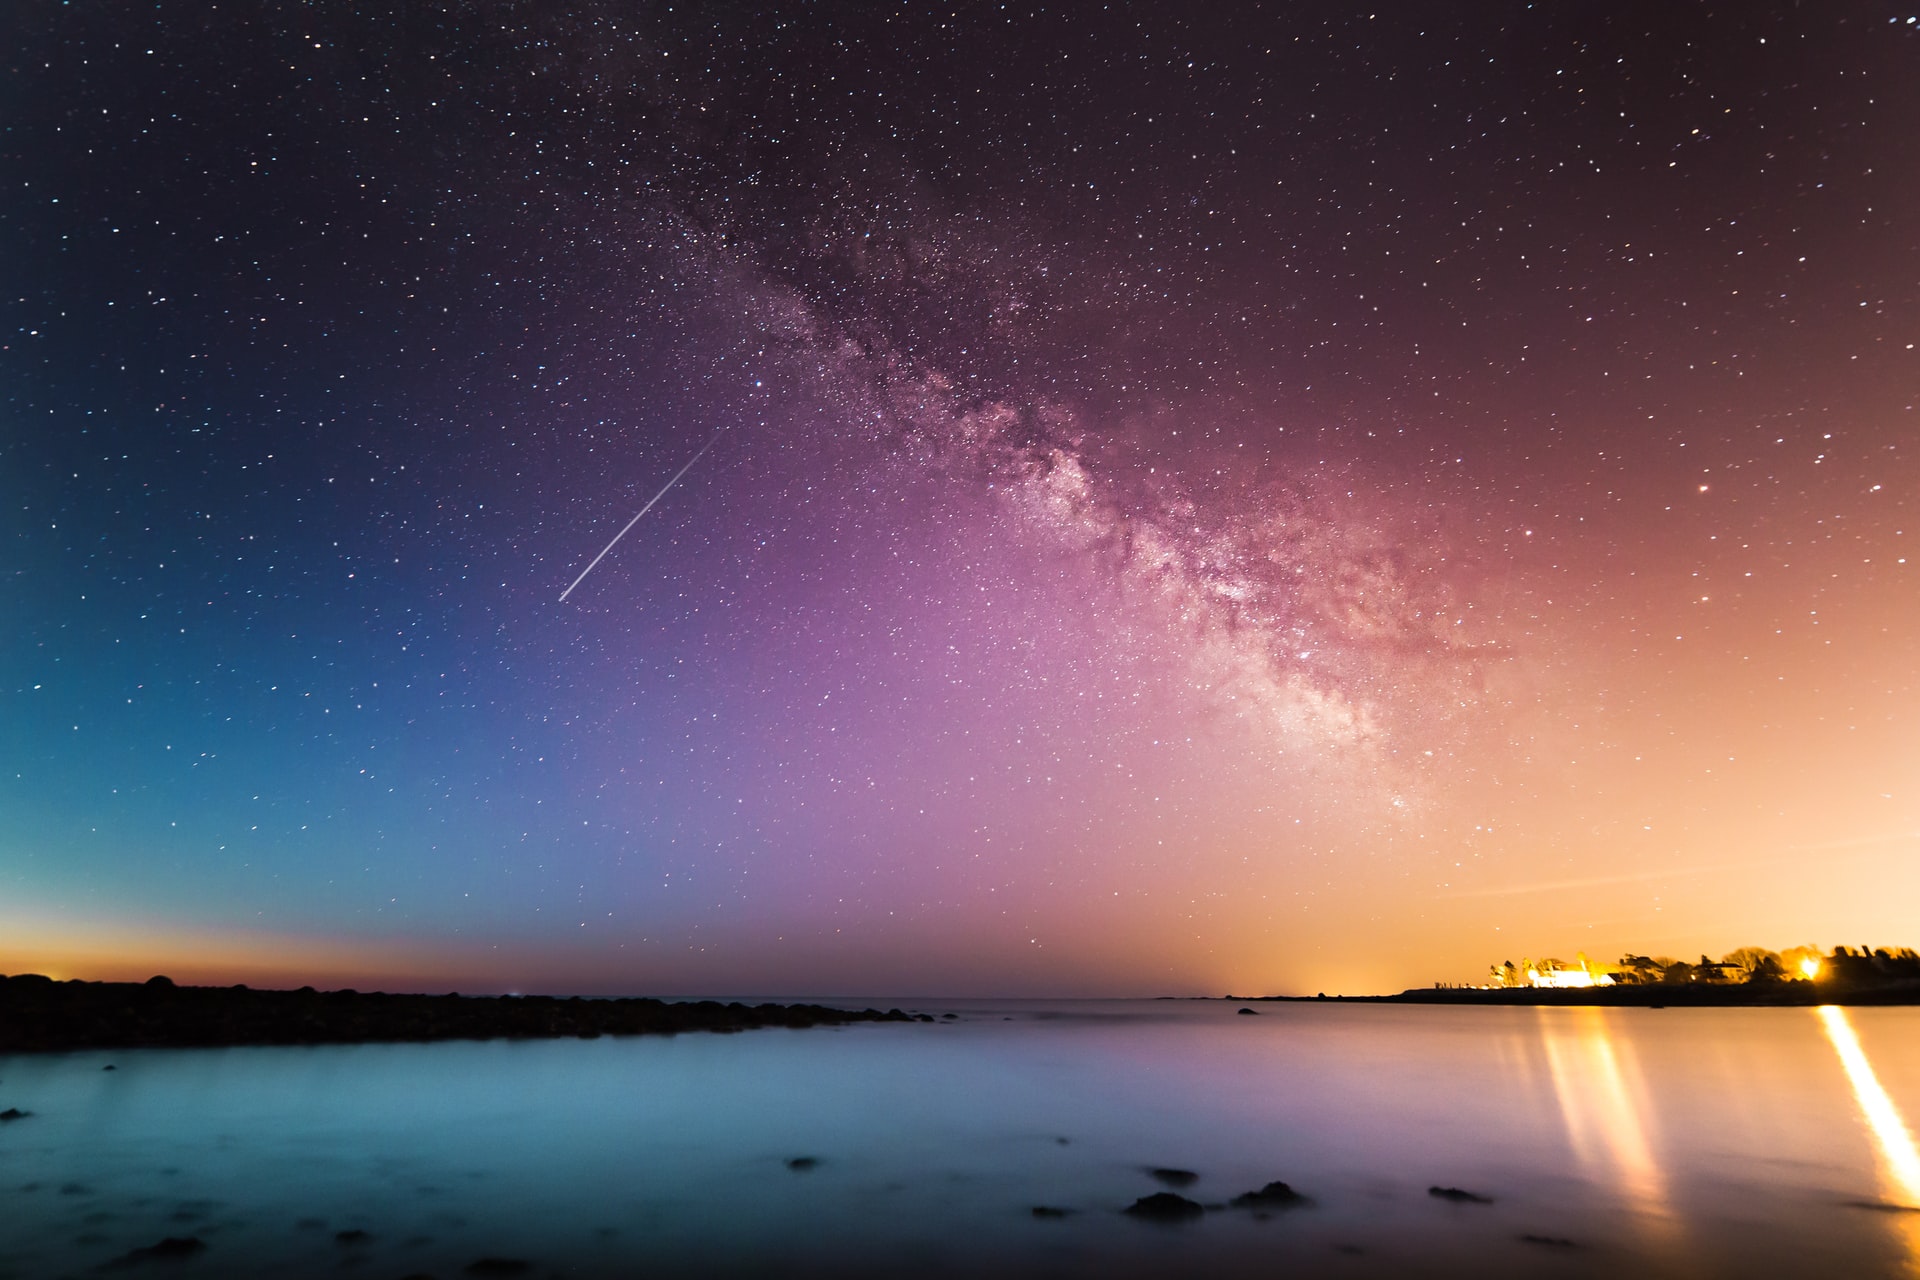 Photo of night sky by Kristopher Roller on Unsplash